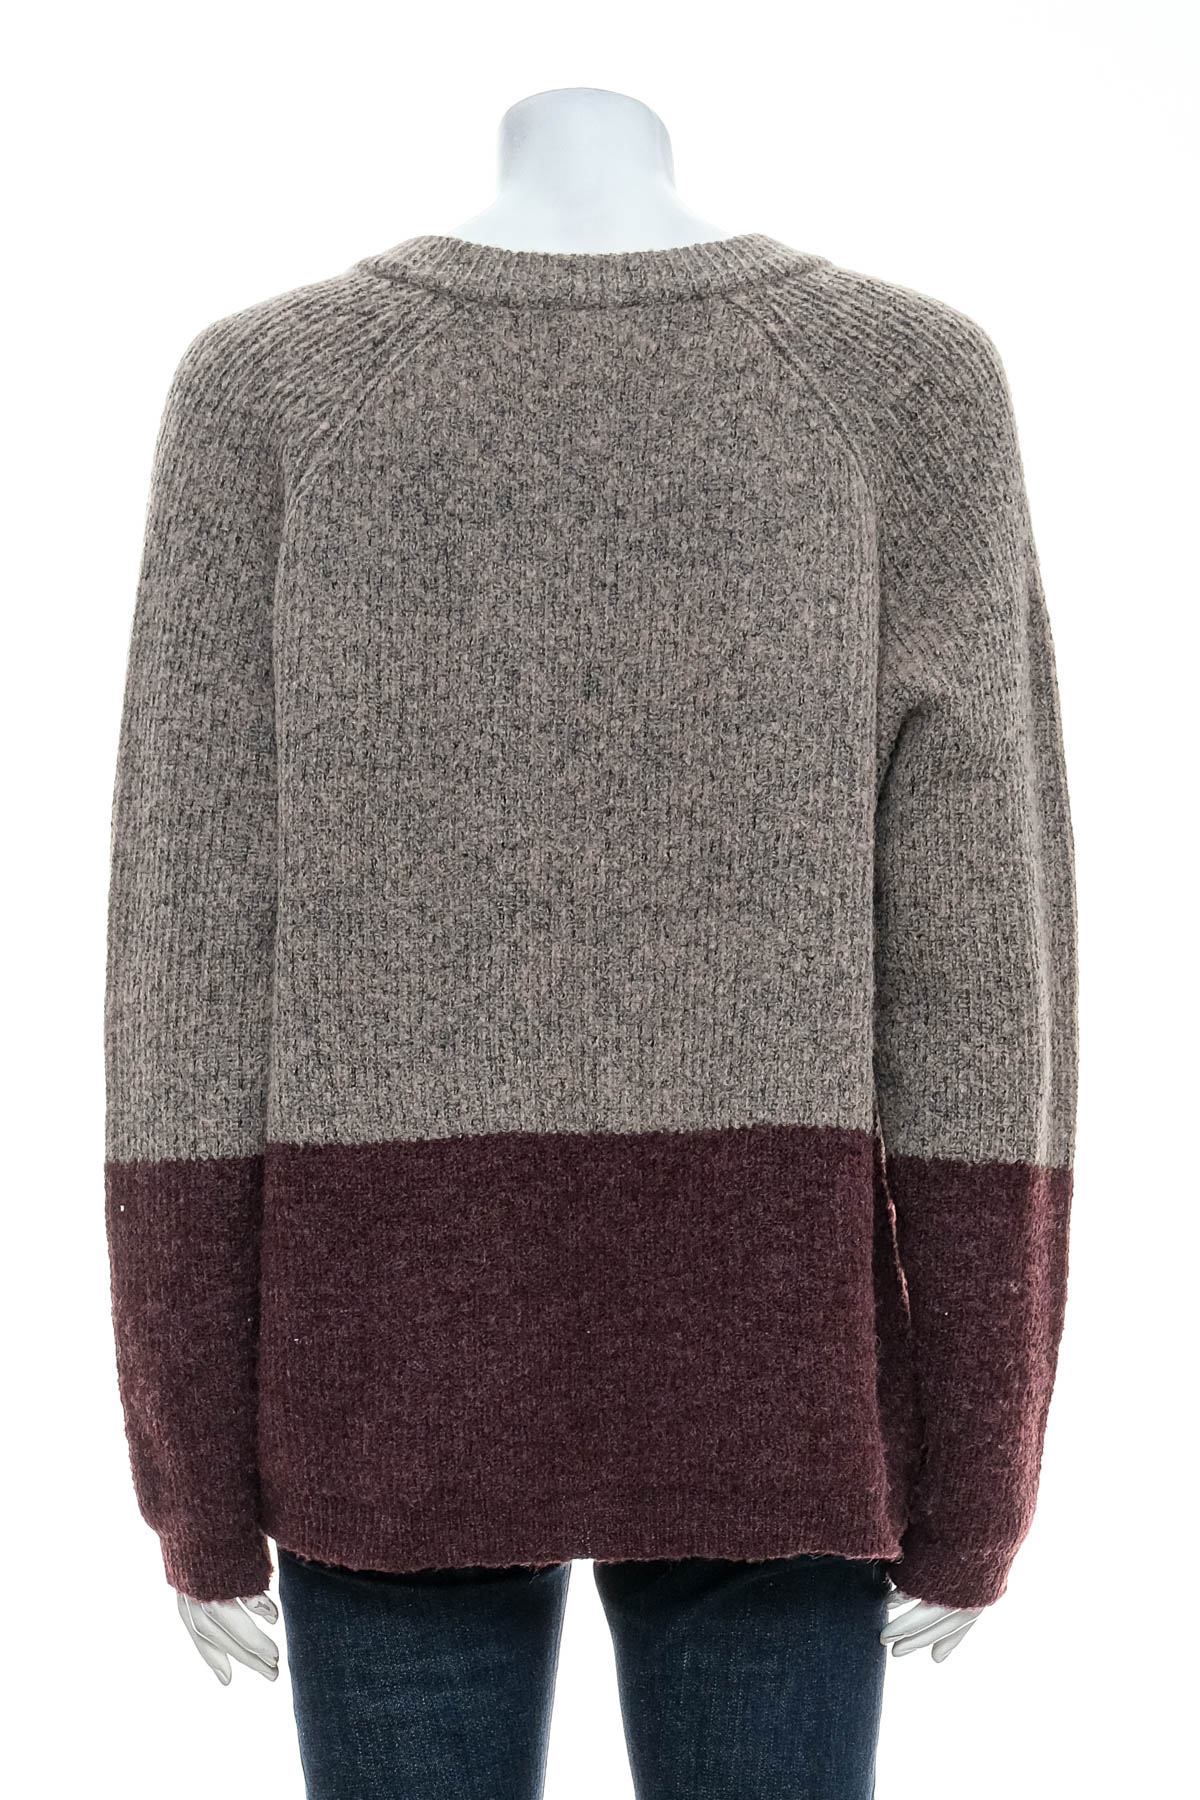 Women's sweater - Saint Tropez - 1